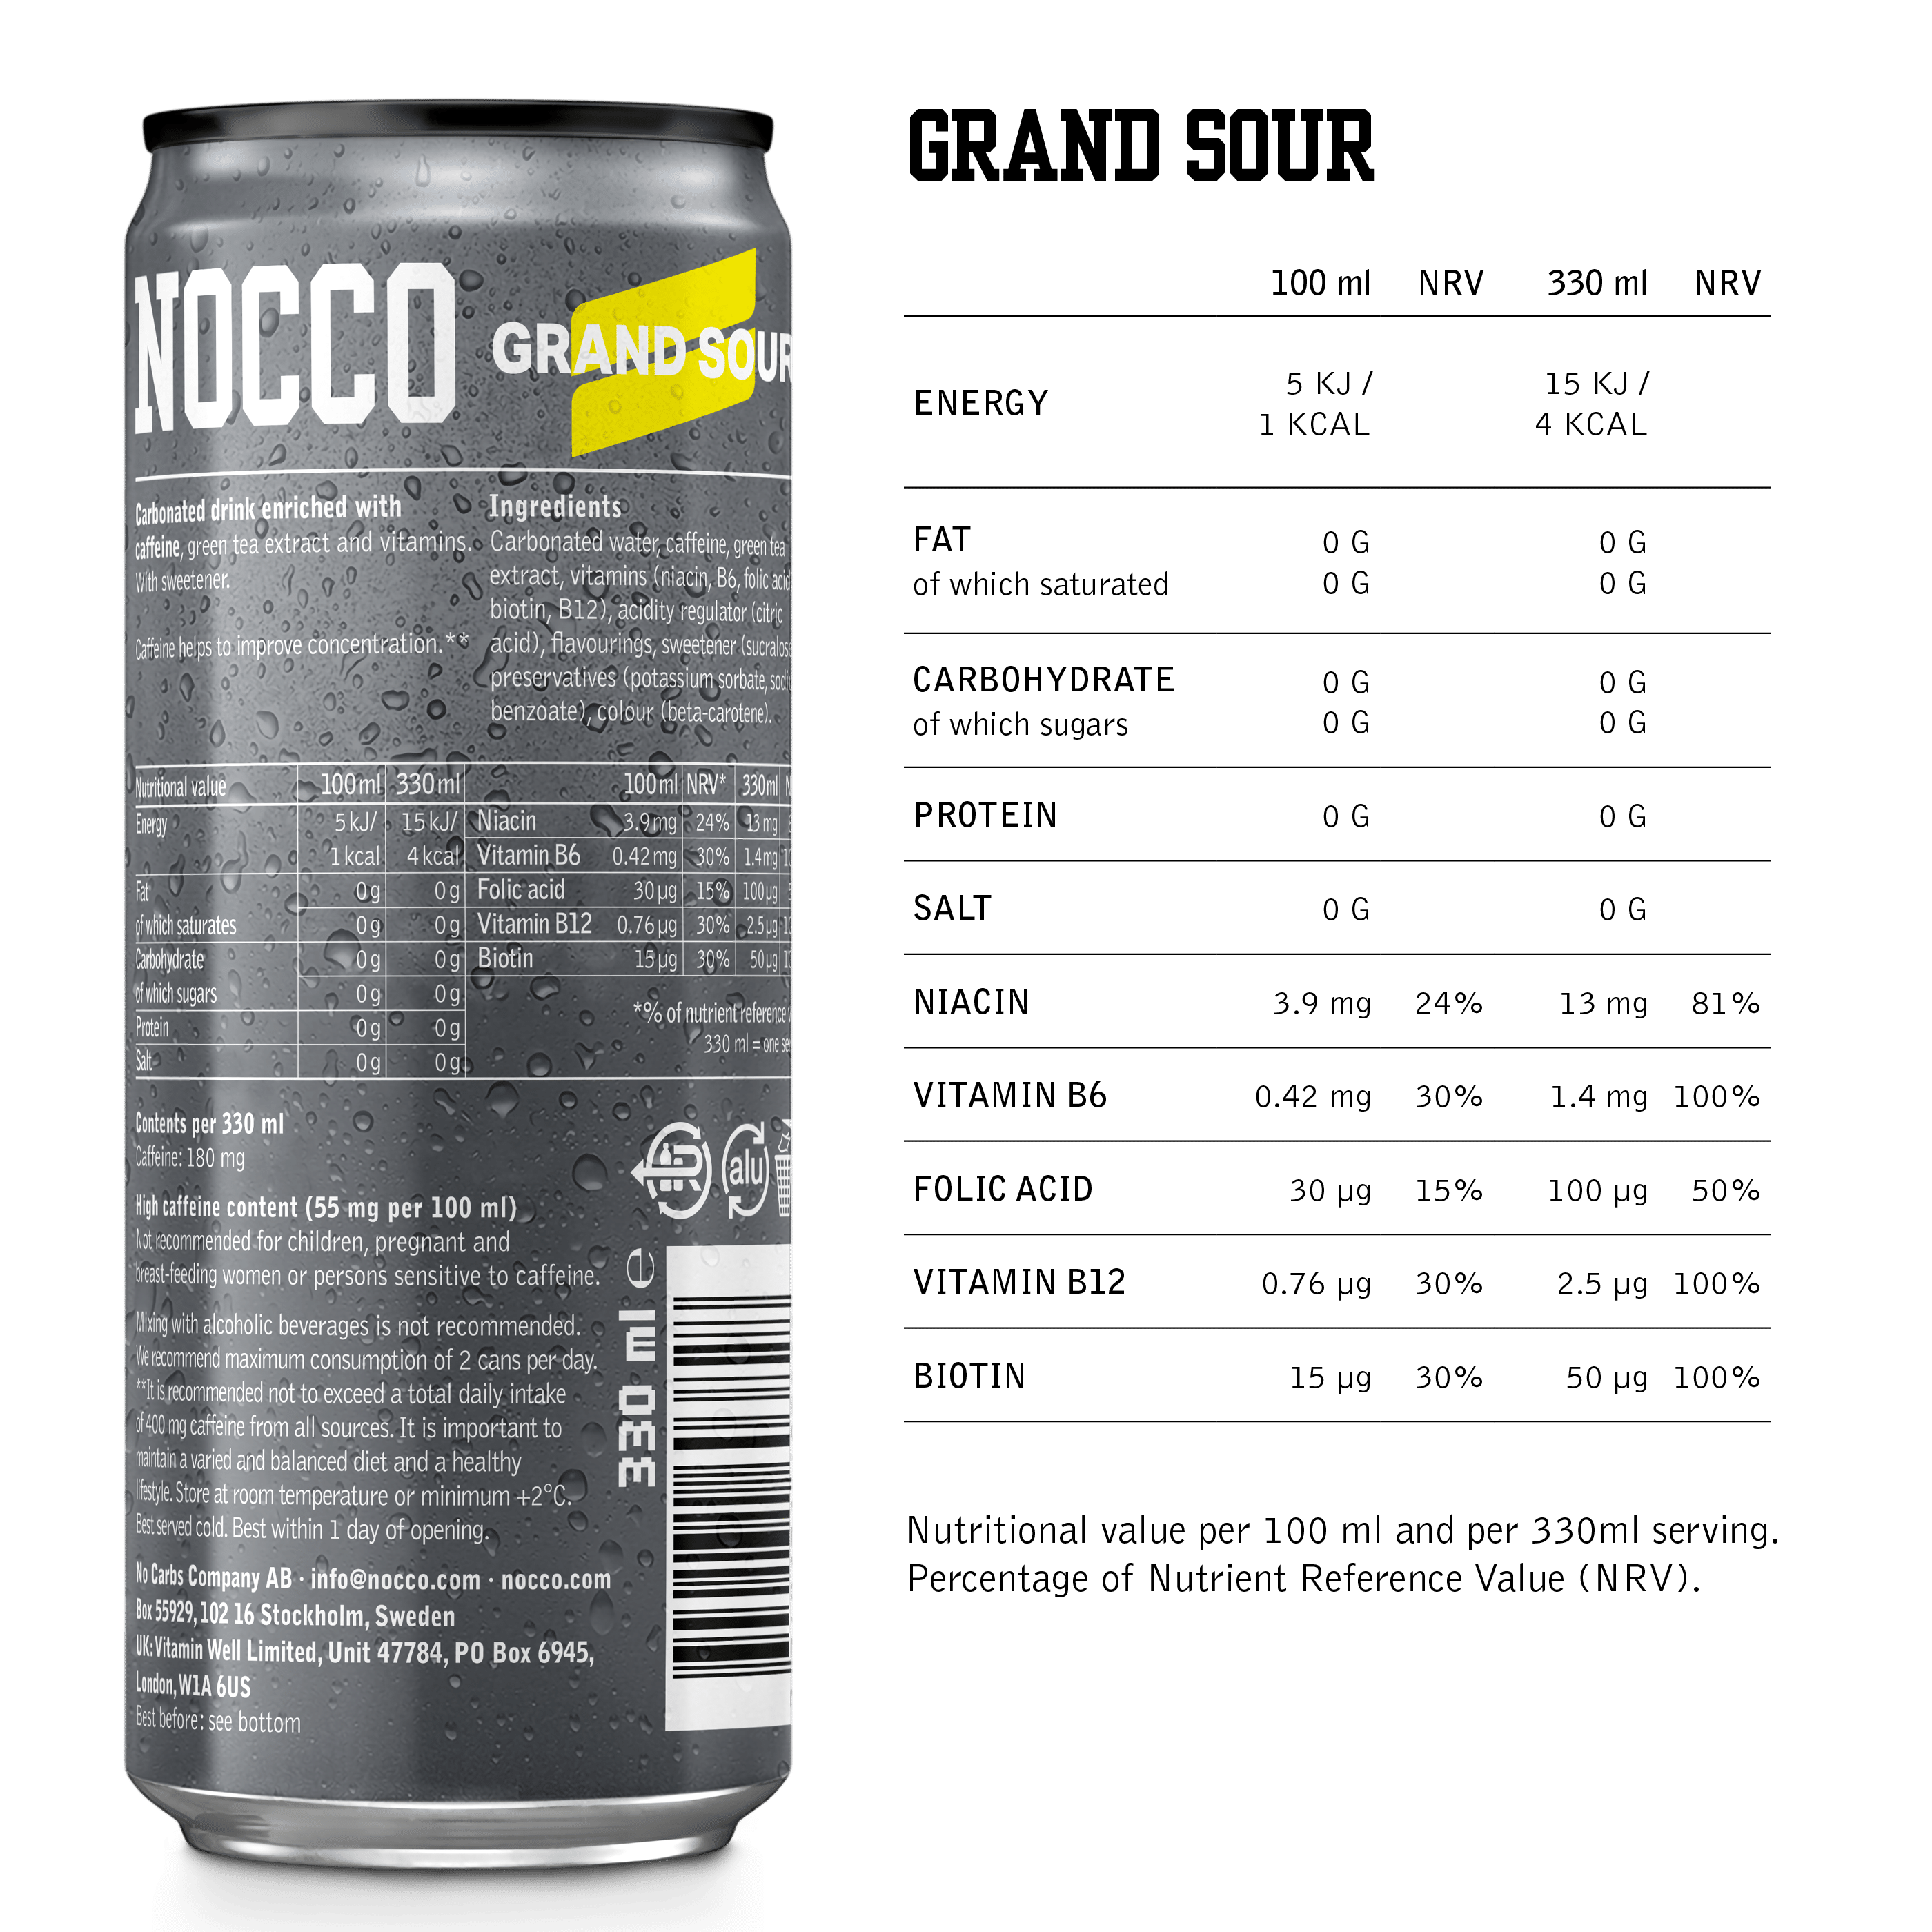 Nocco Grand Sour Nutrition